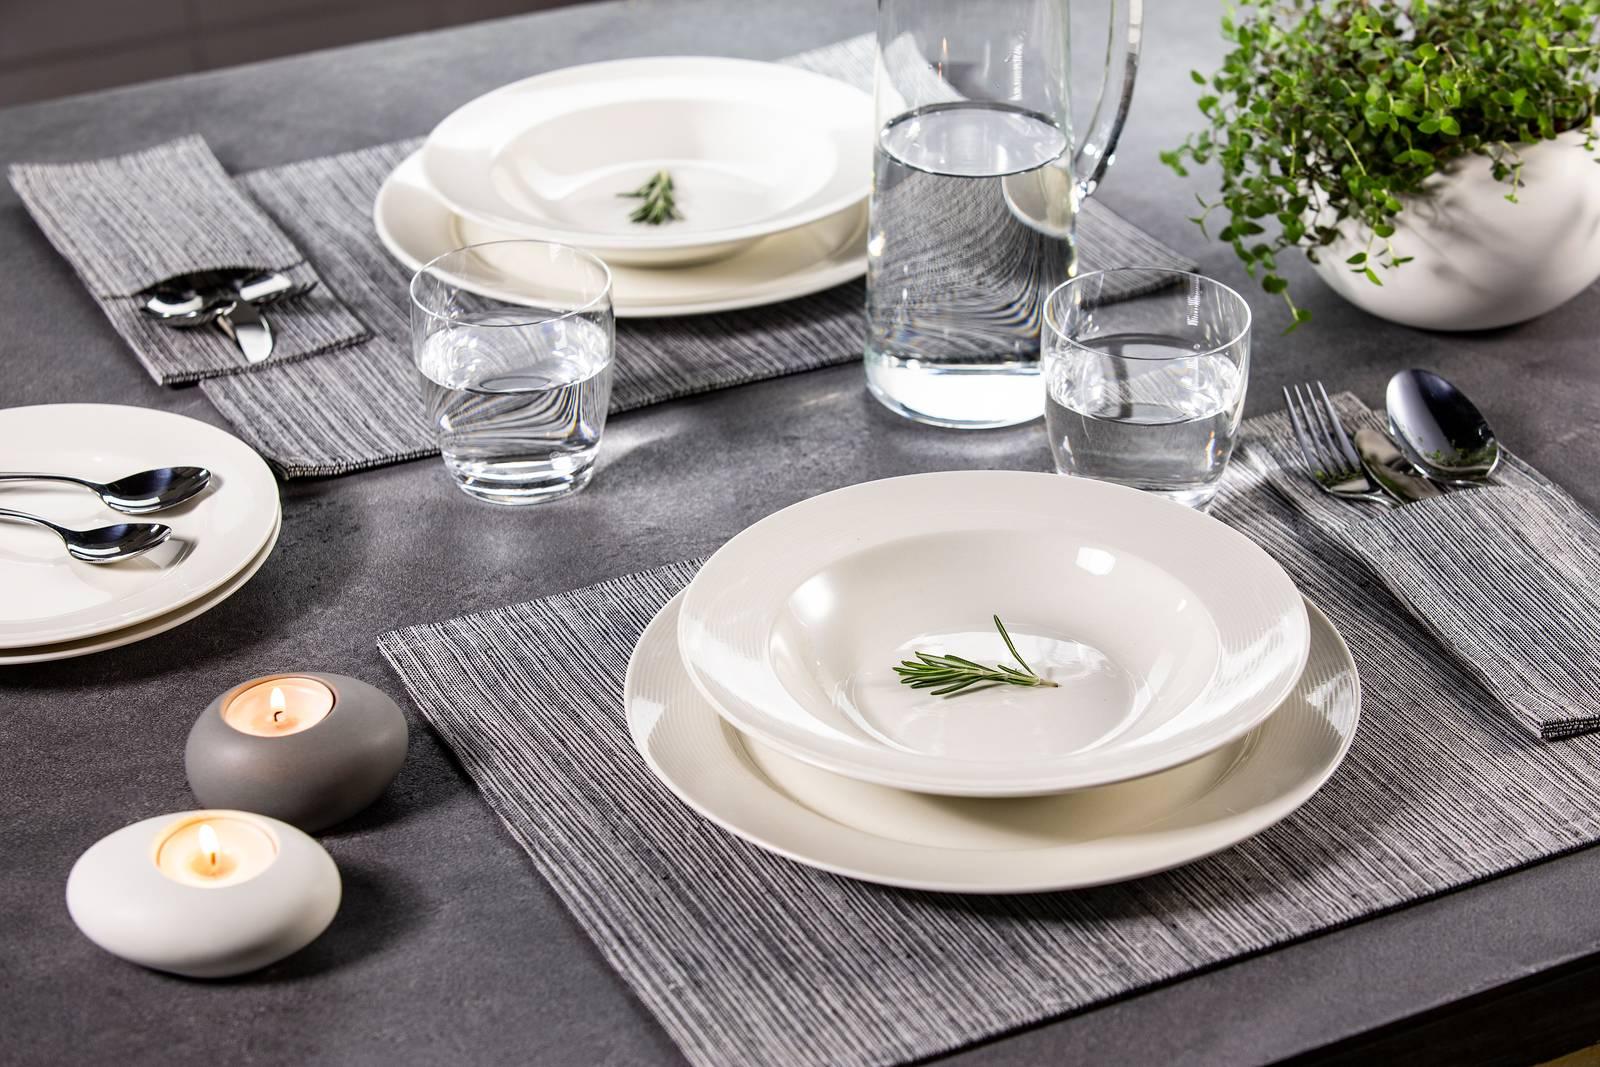 Piatti neri/bianchi piatti da tavola in porcellana piatti da tavola per  piatti da cucina in ceramica e Set da pranzo Set da pranzo Dropshipping